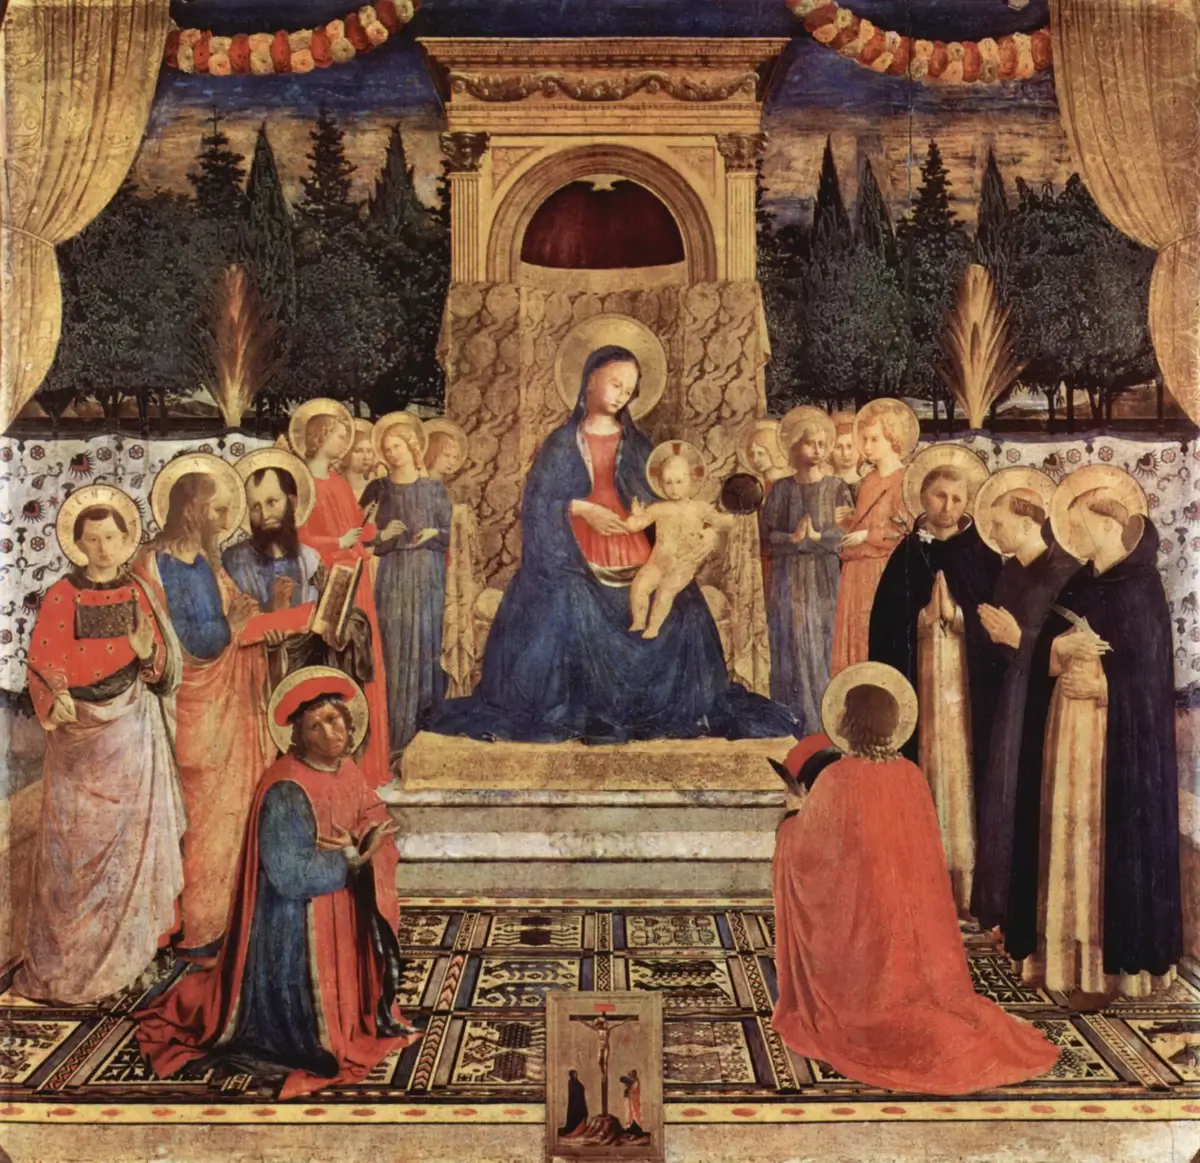 Fra Angelico, "San Marco Altarpiece", 1443